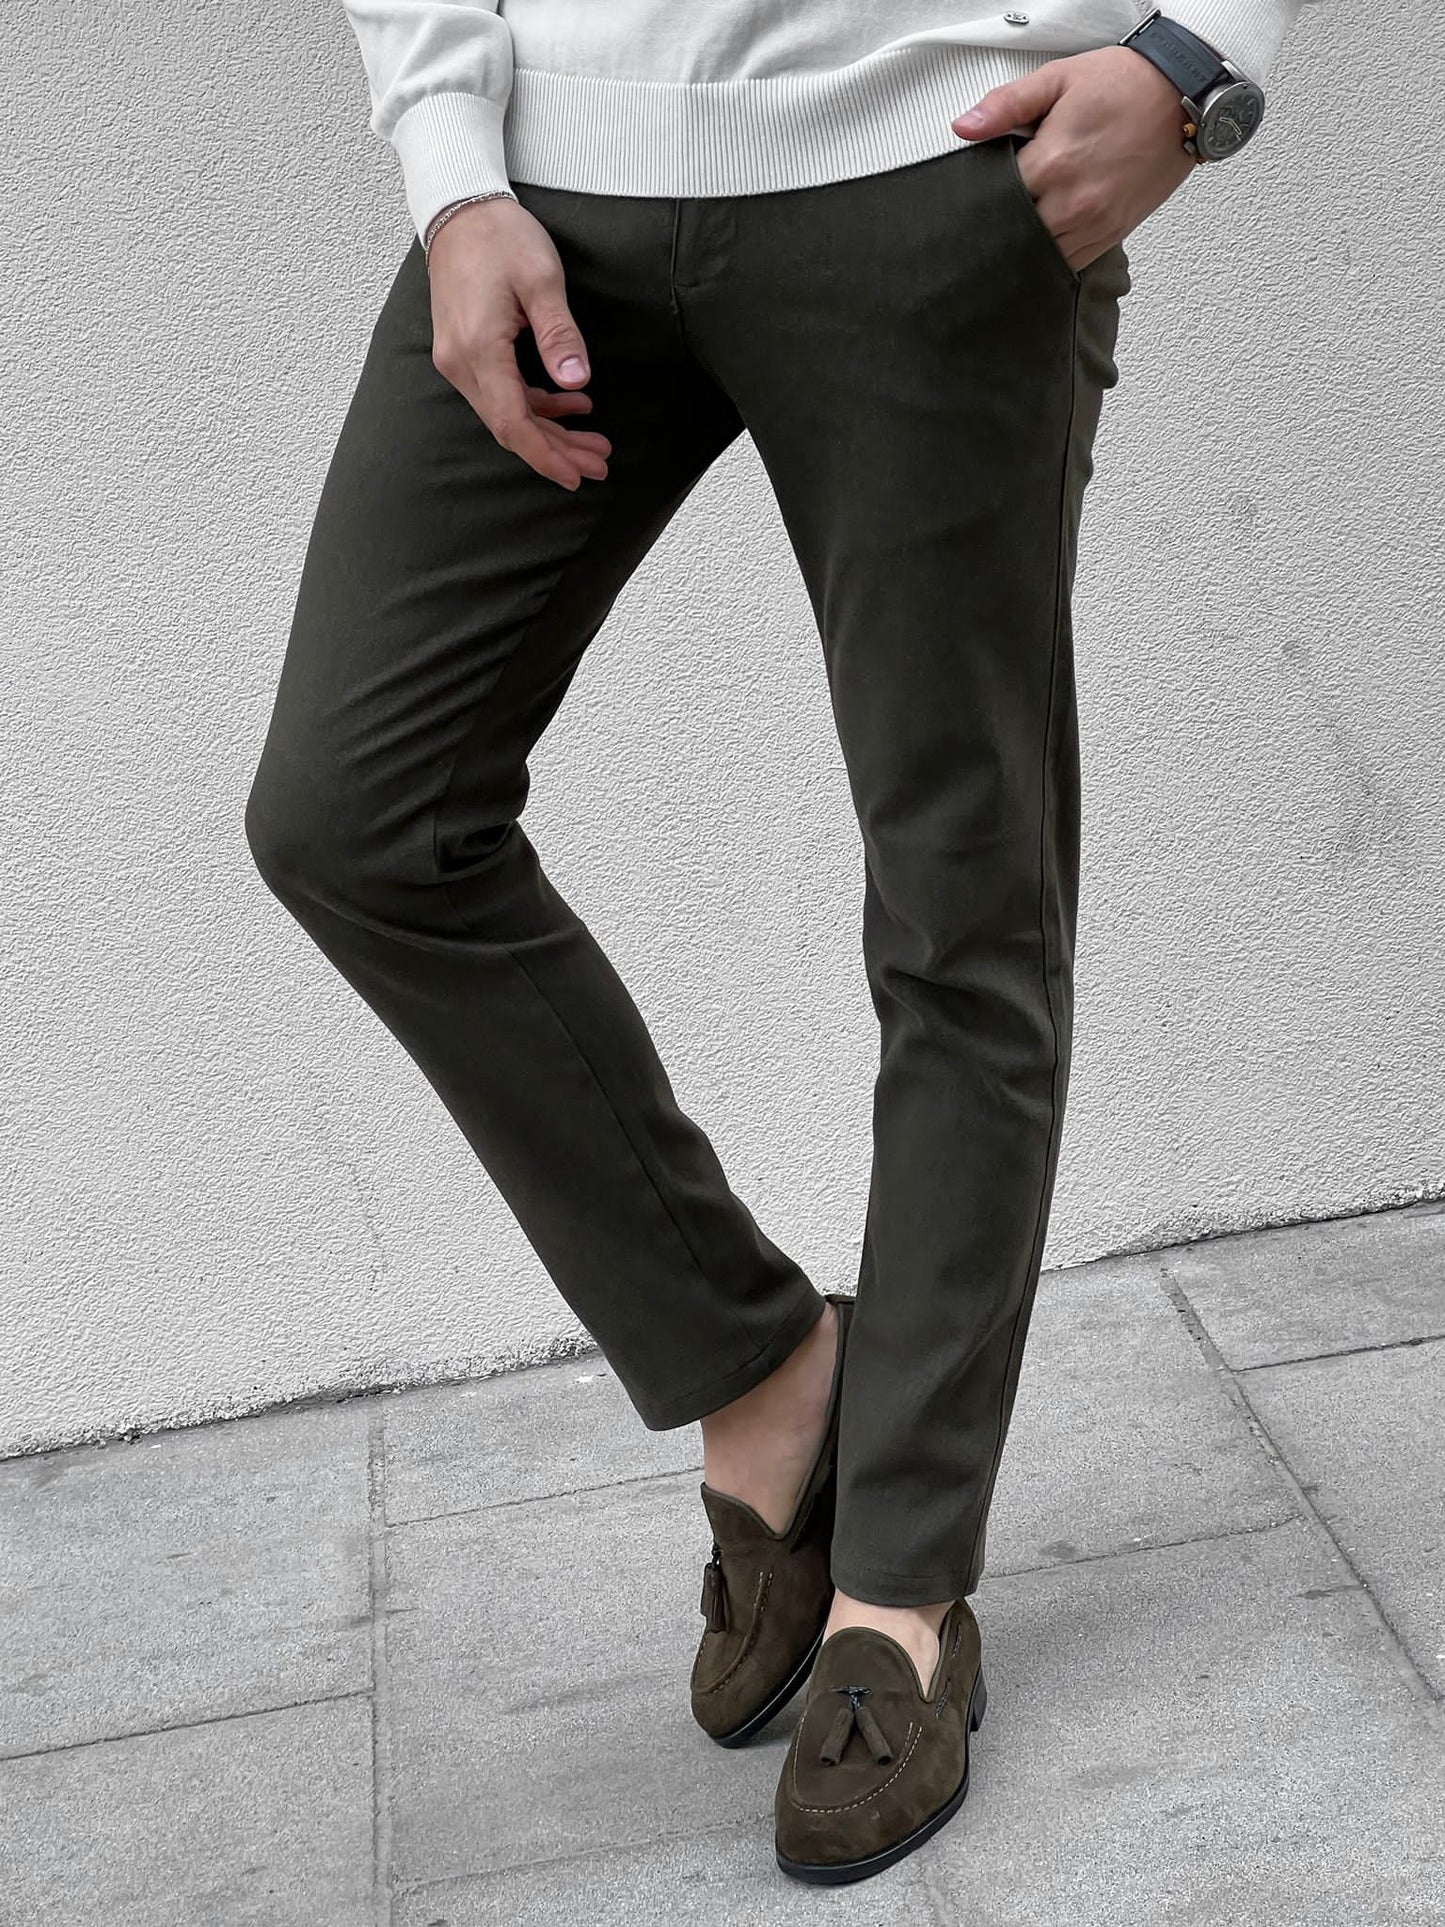 Versatile self-patterned khaki pants